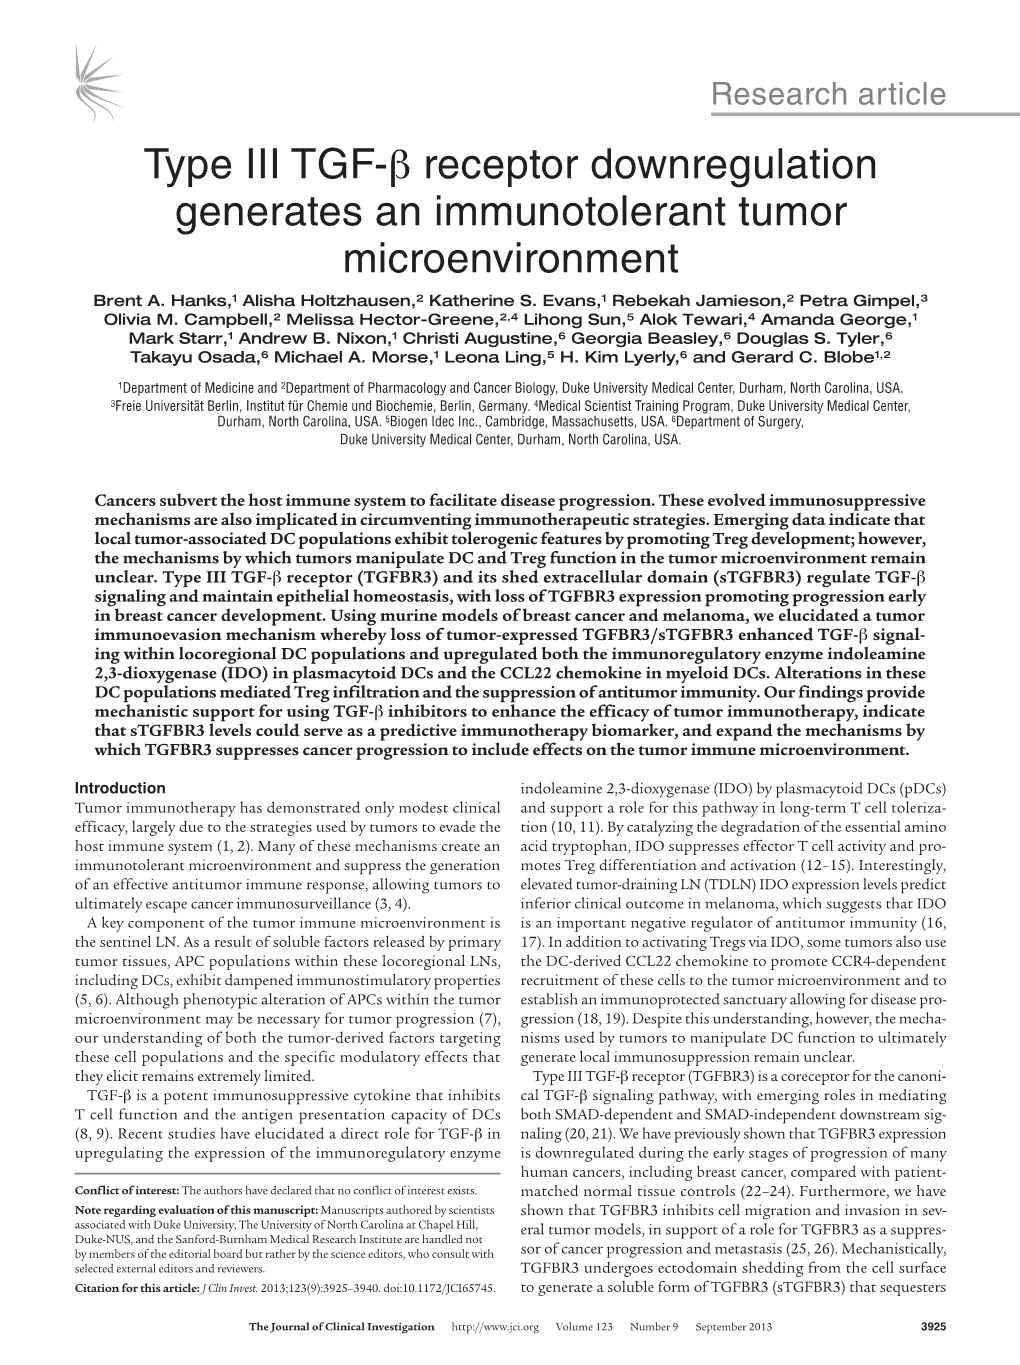 Type III TGF-Β Receptor Downregulation Generates an Immunotolerant Tumor Microenvironment Brent A